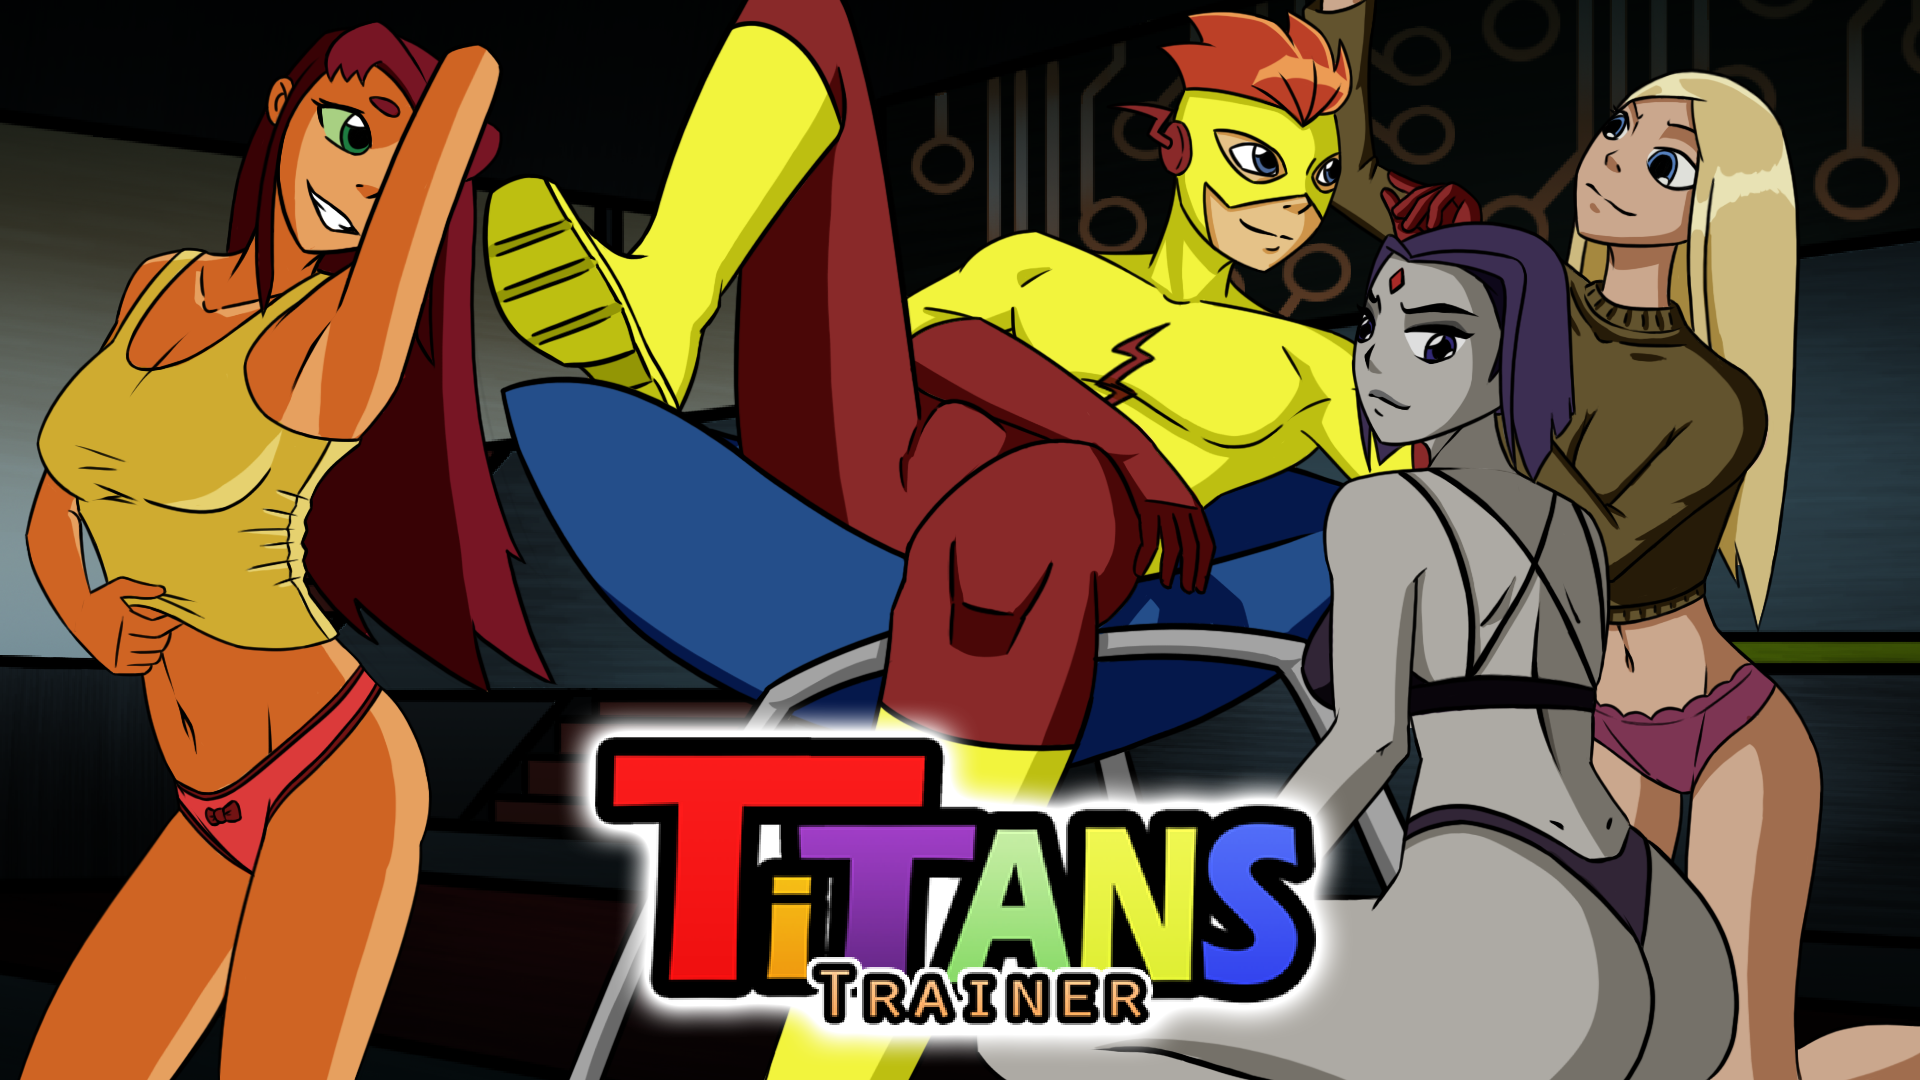 Titans porn games